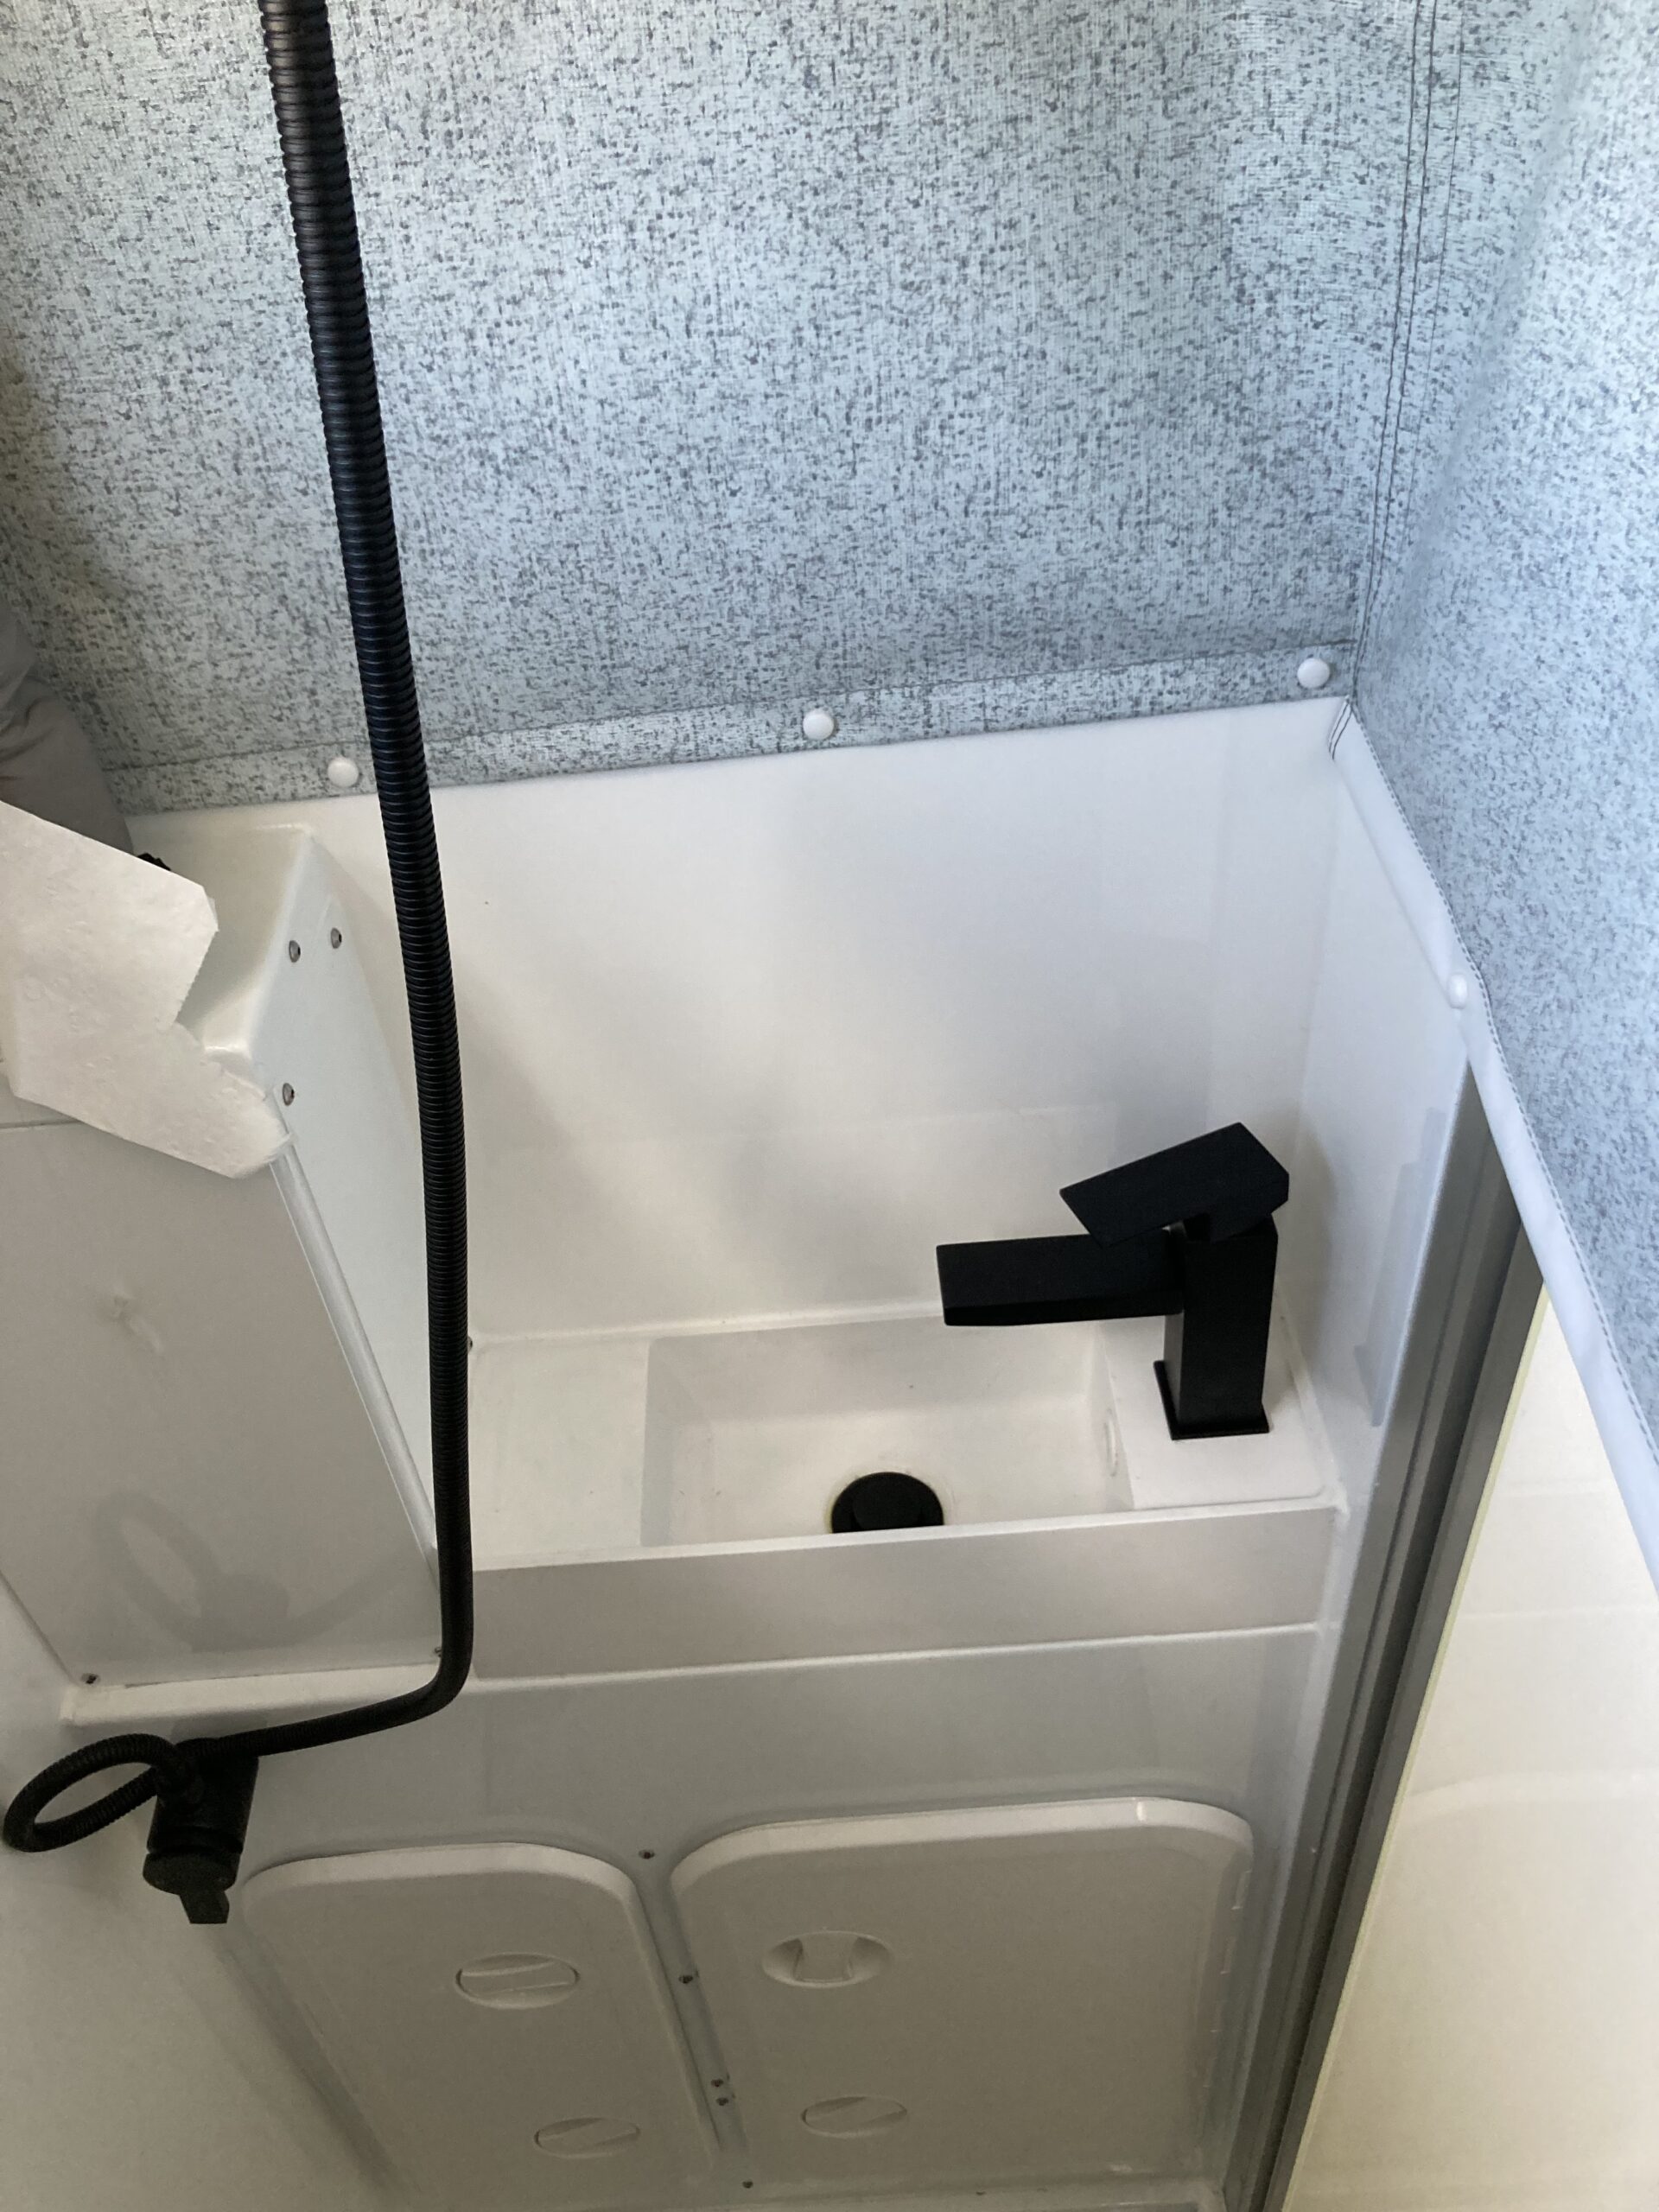 caravan sink with tap